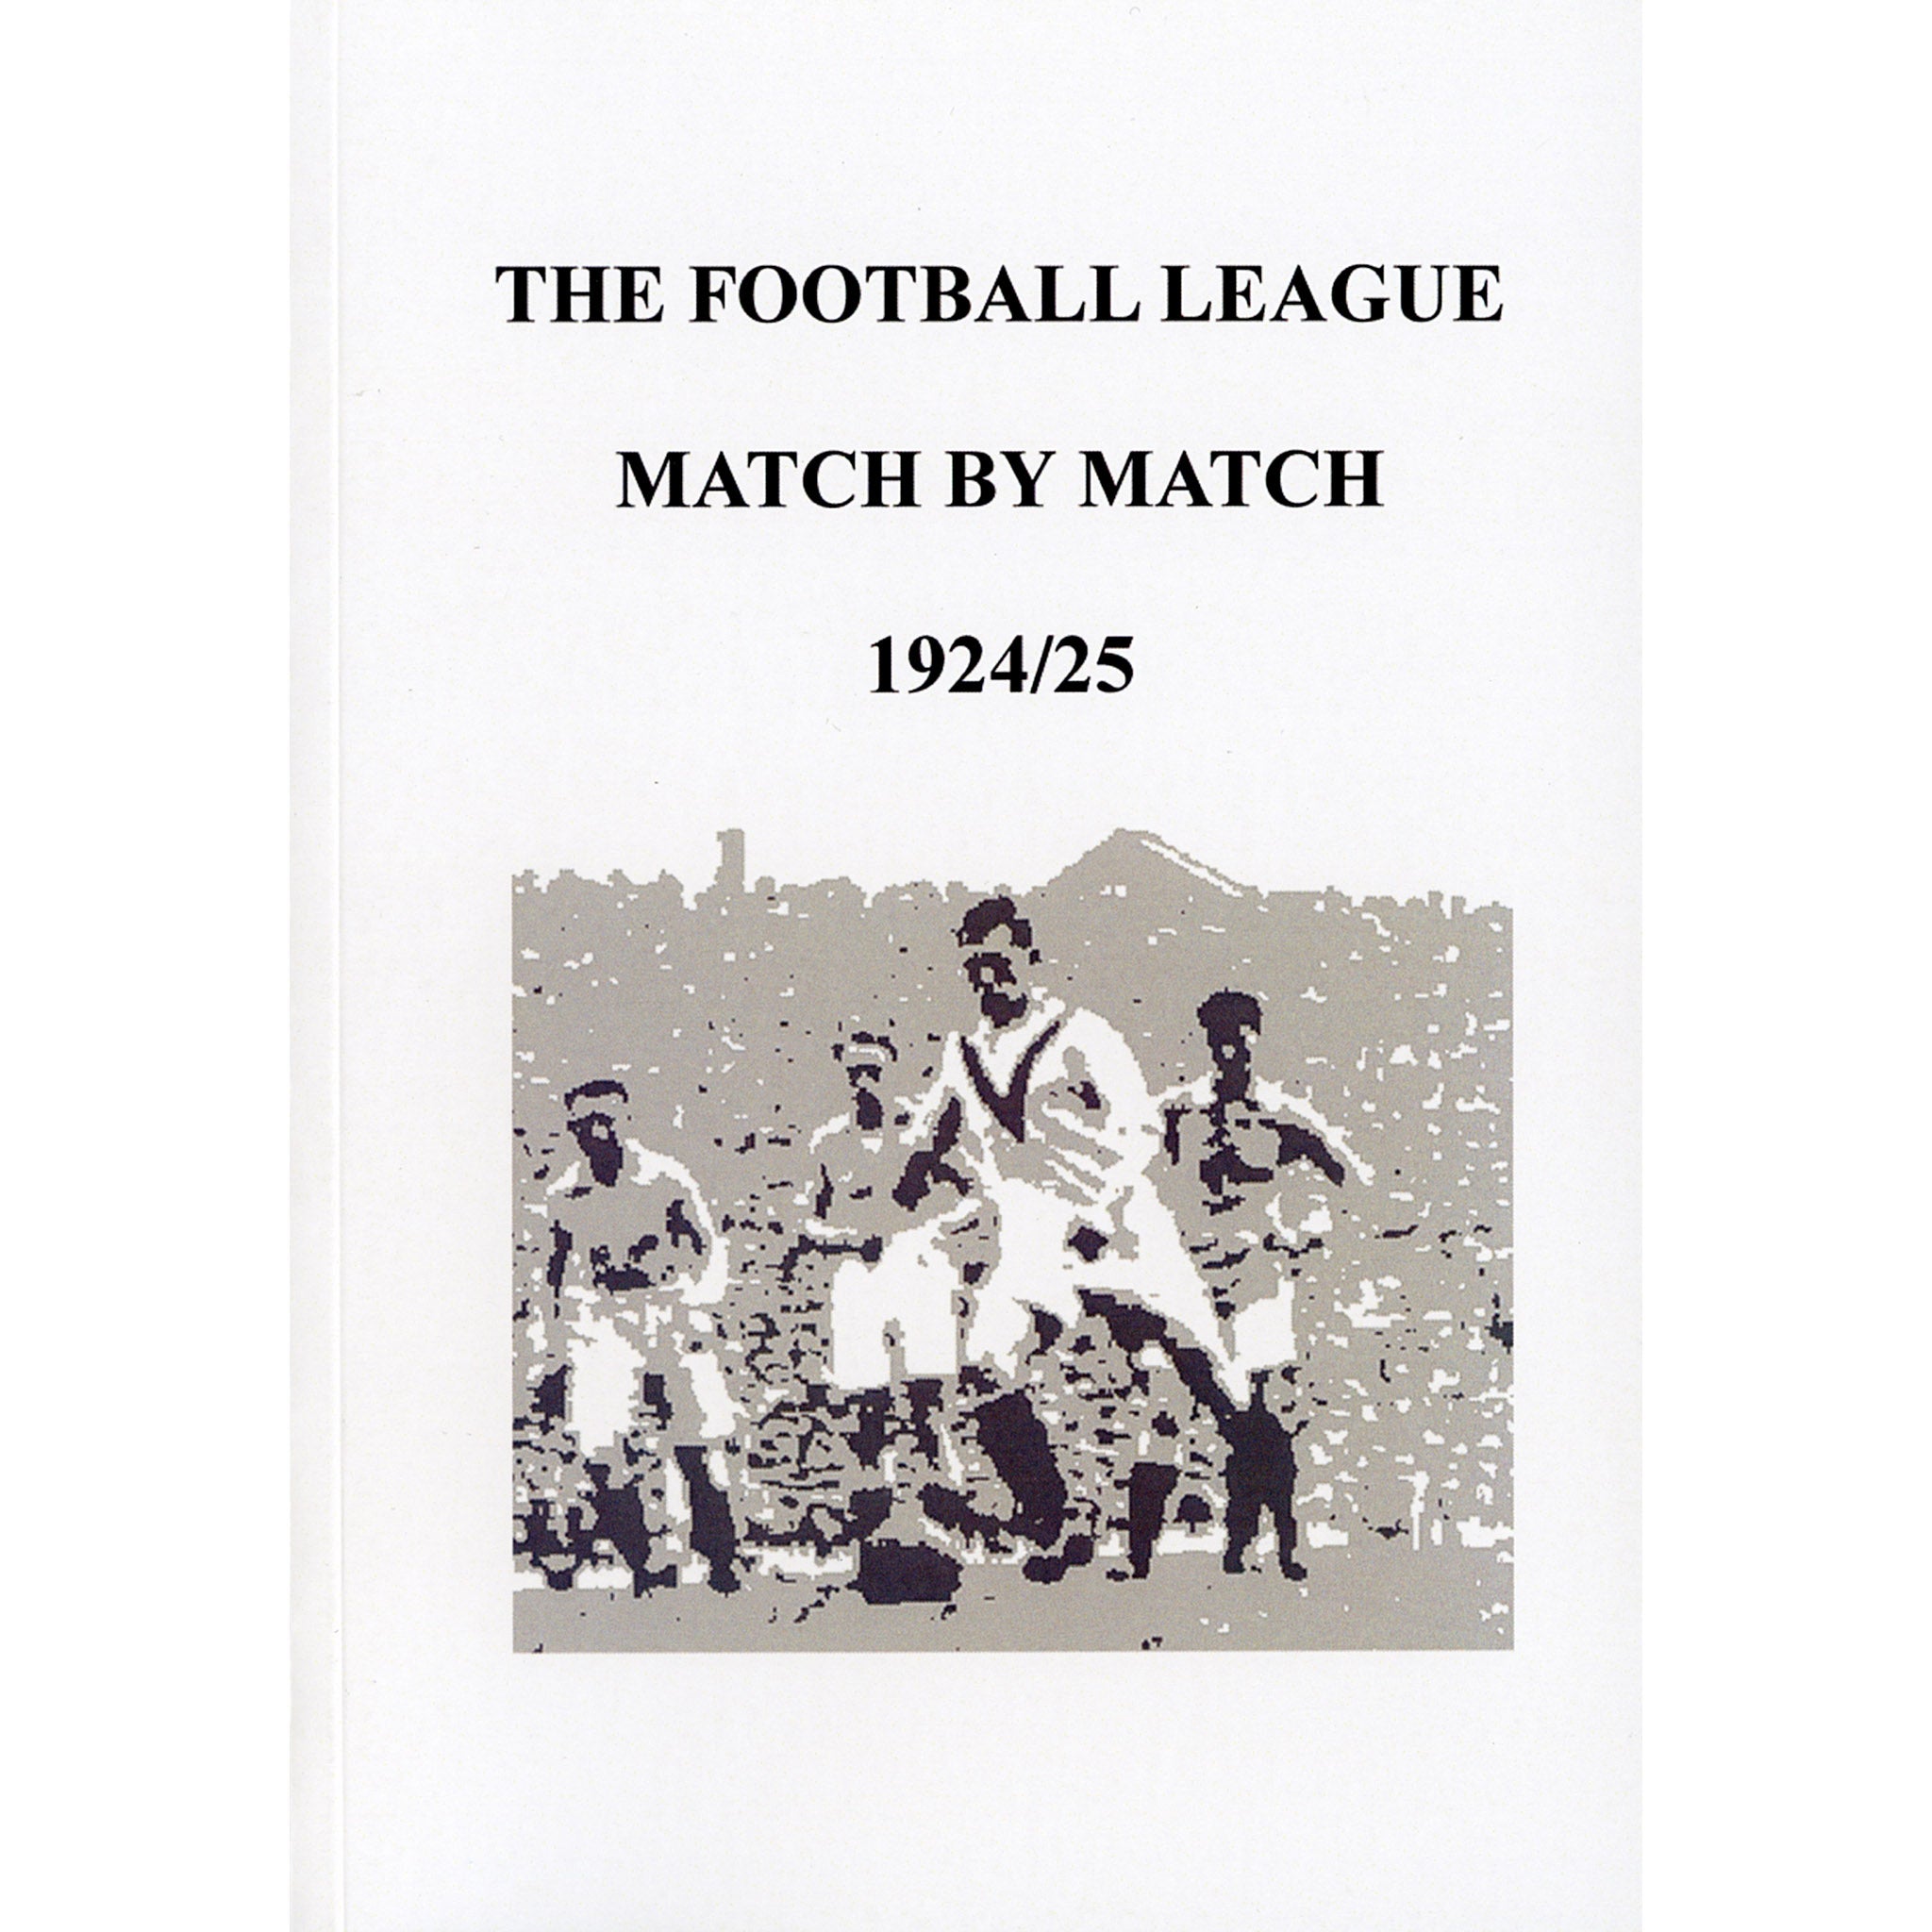 The Football League Match By Match 1924/25